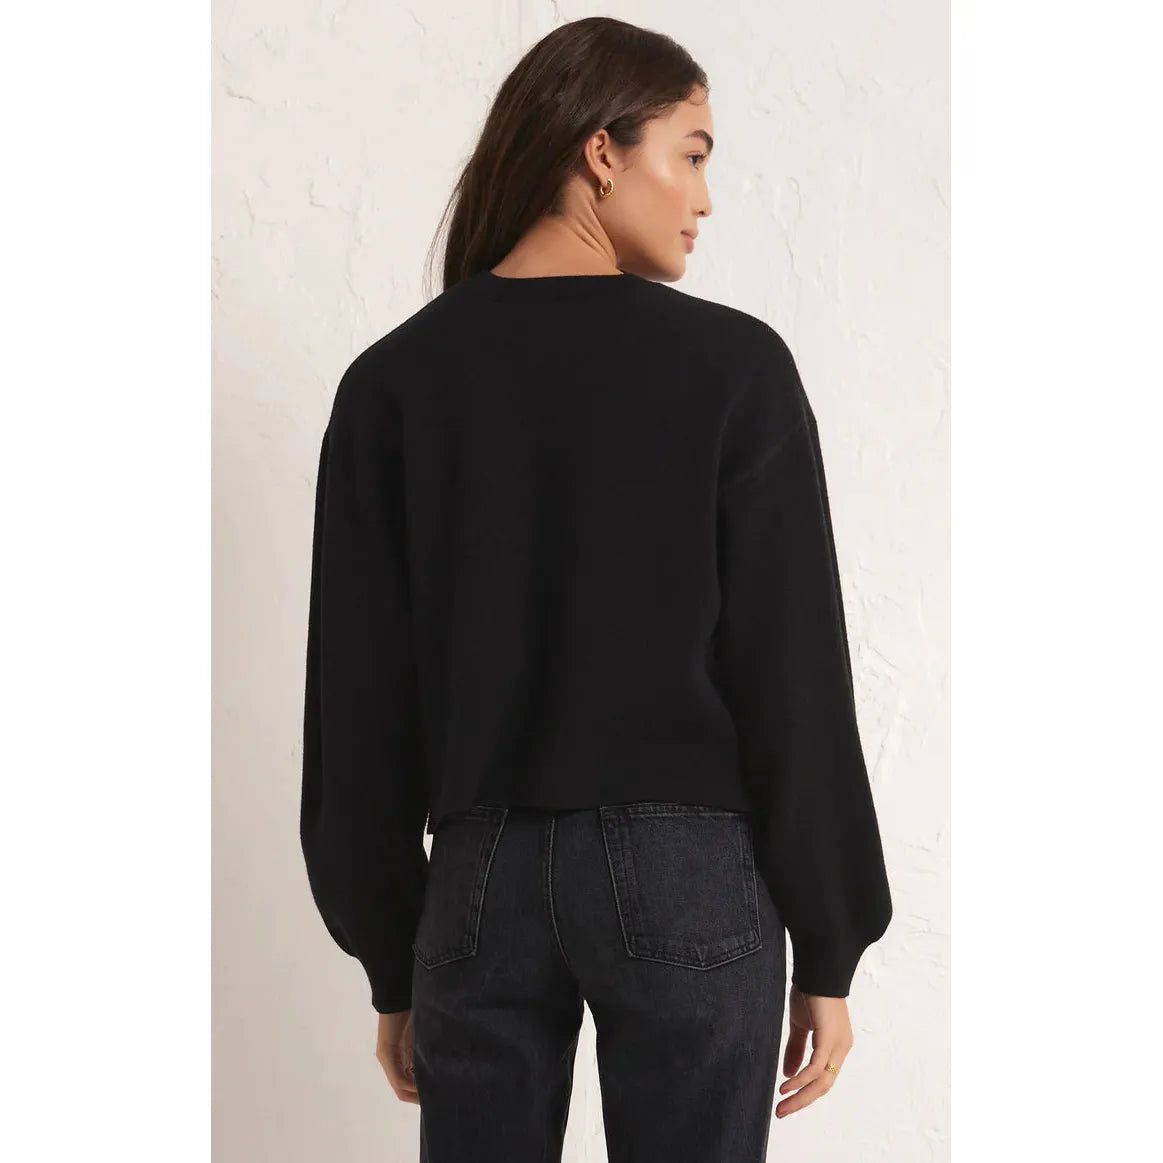 Z Supply - Palms Sweater in Black